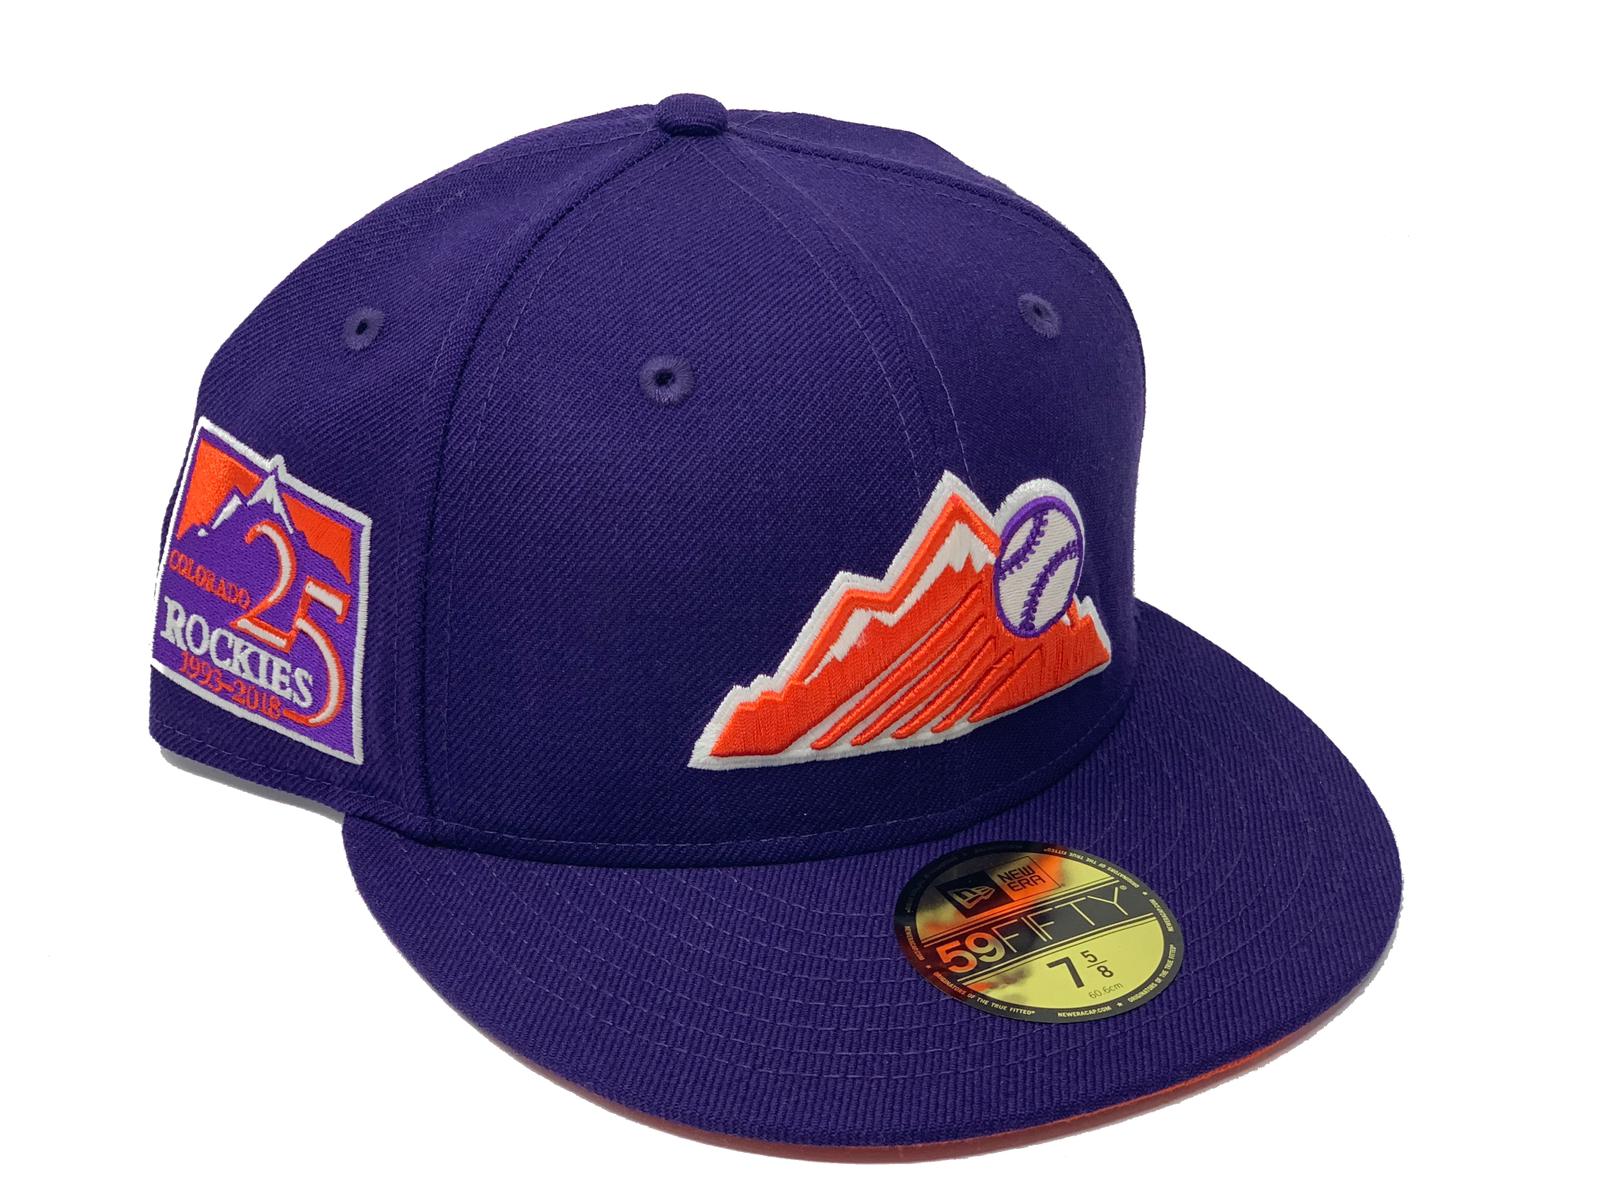 New Era 59Fifty Colorado Rockies City Connect Patch BP Hat - Purple, G